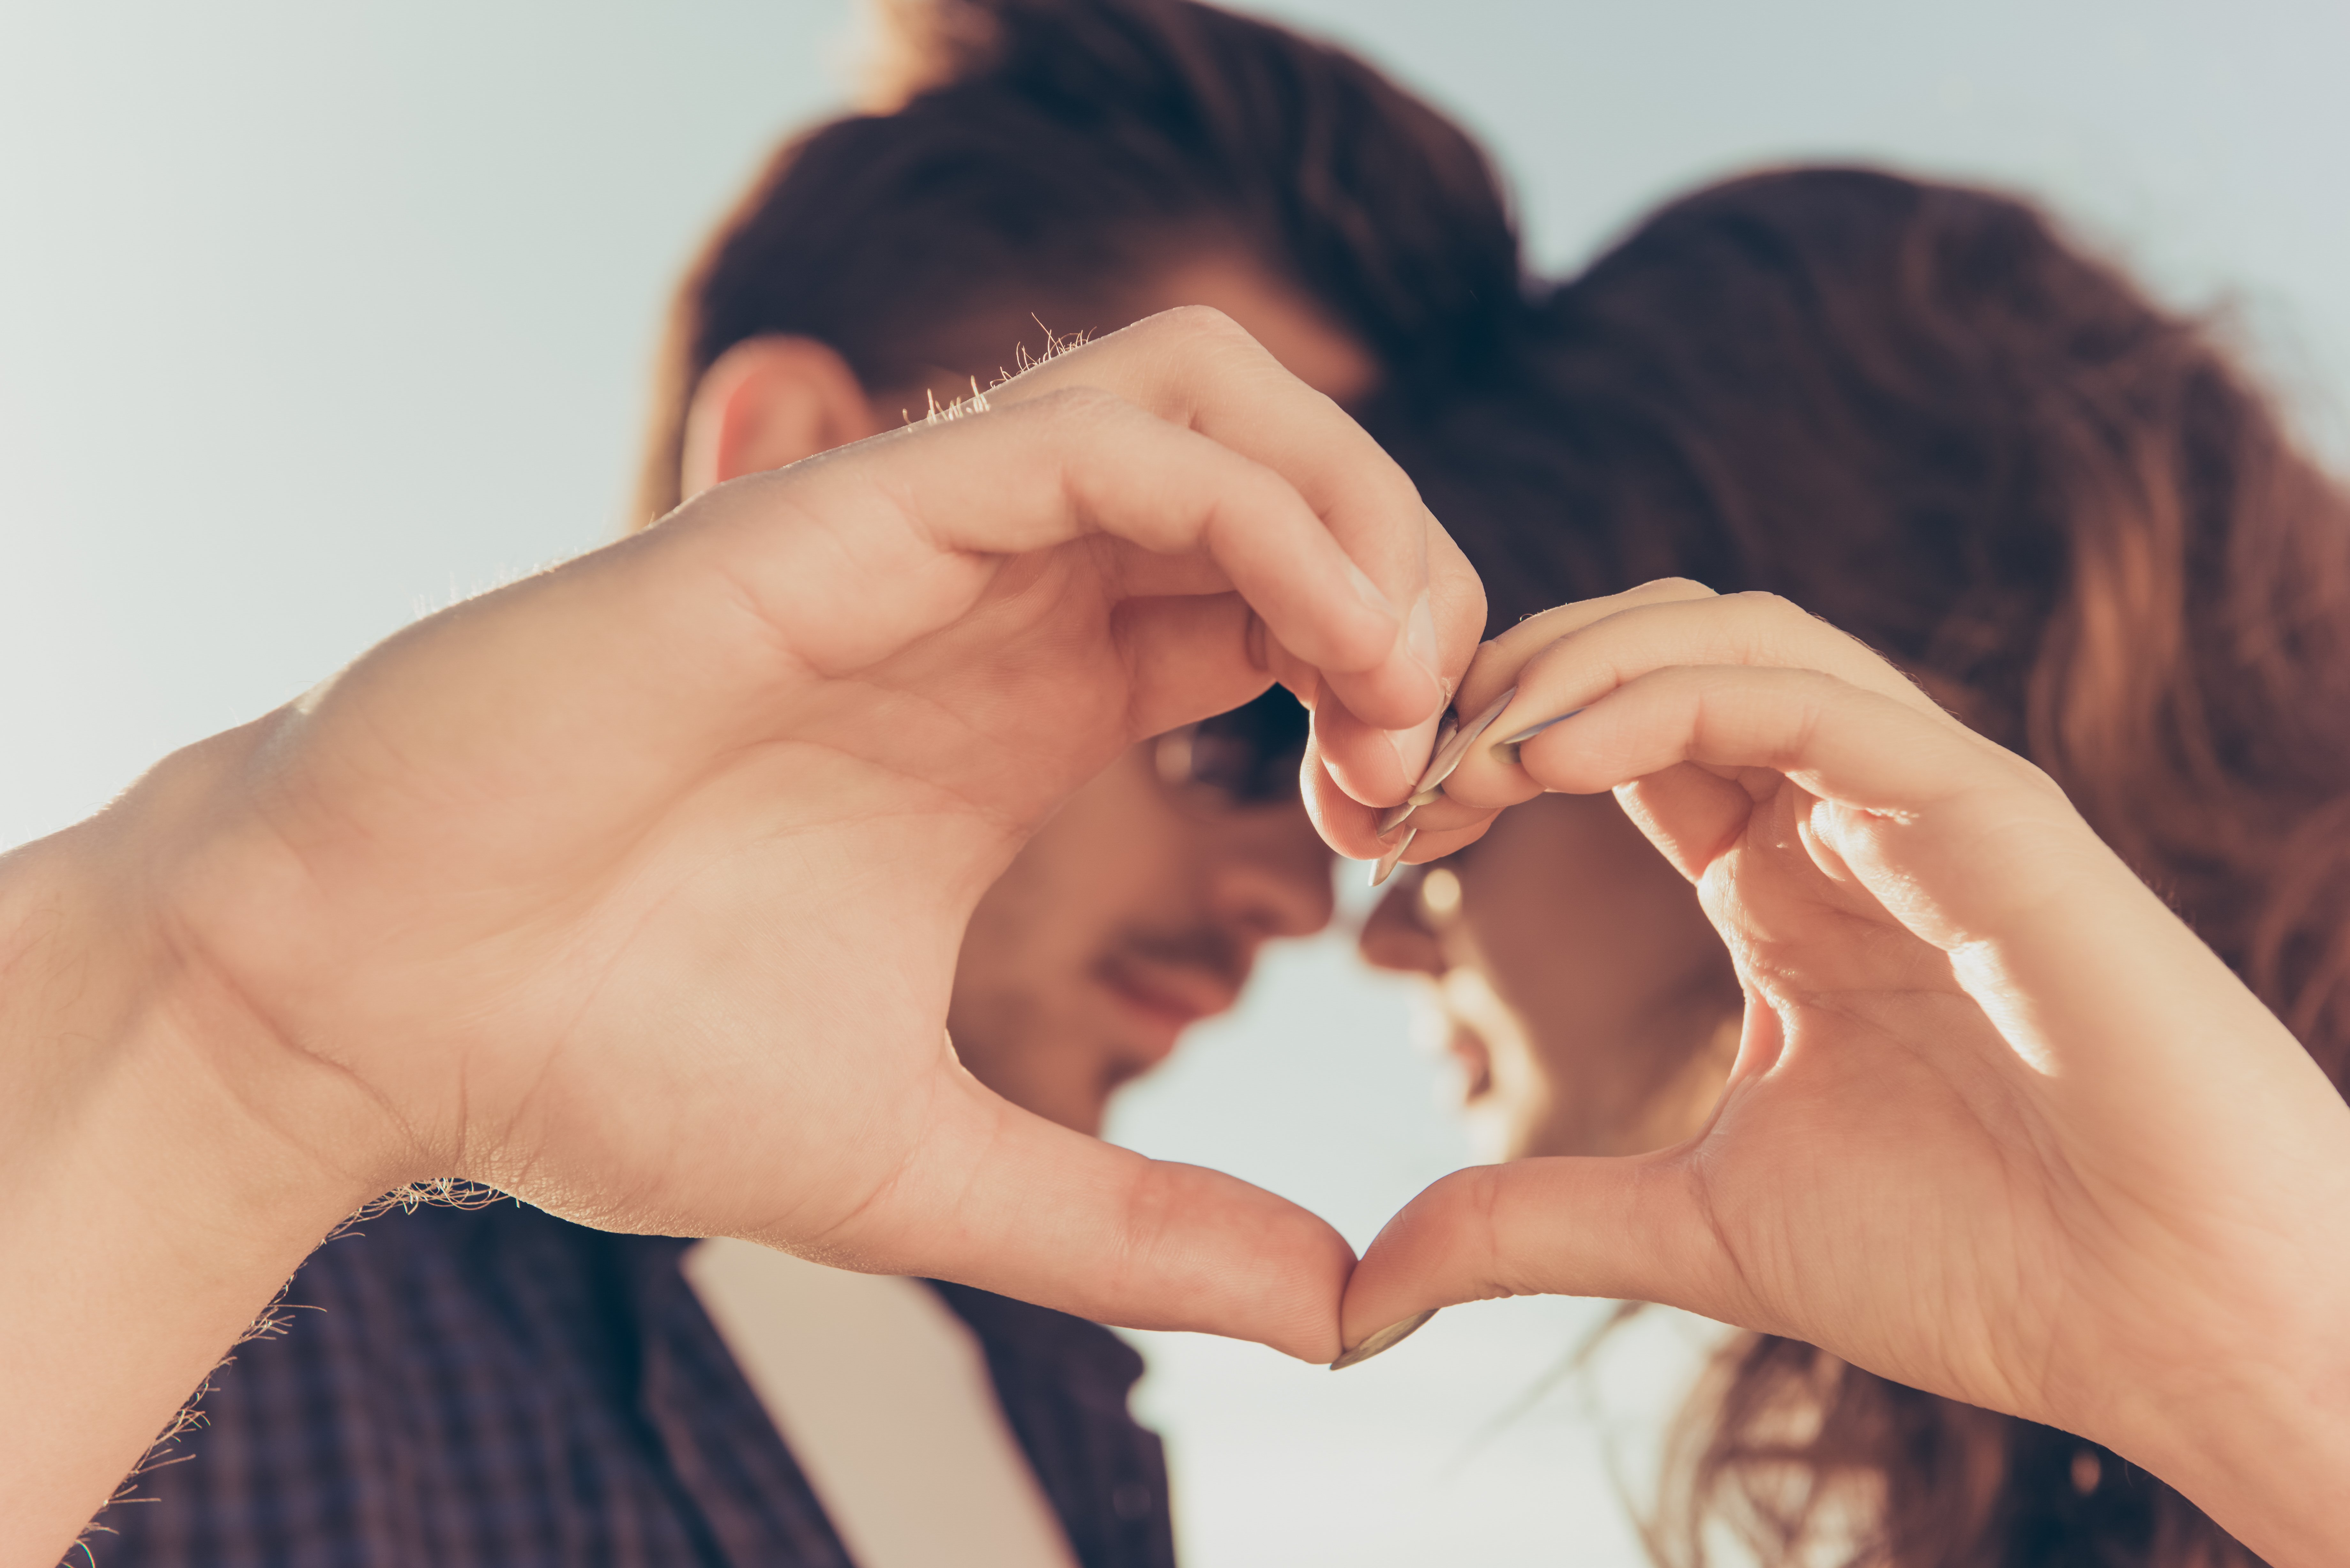 Amor de pareja || Fuente: Shutterstock